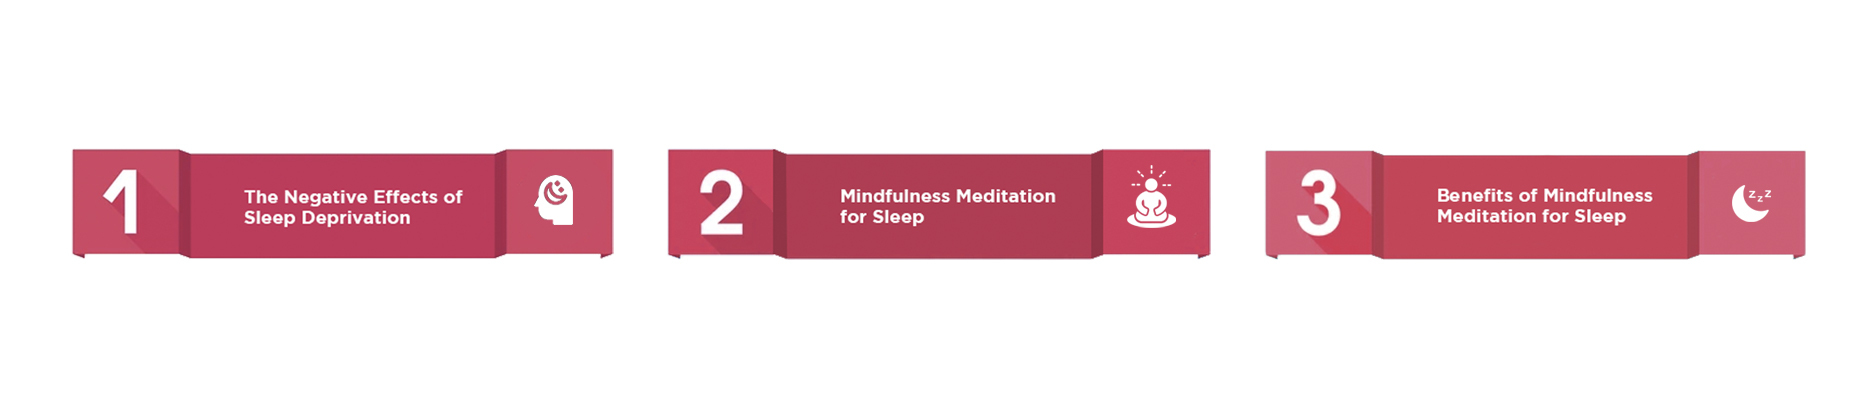 Mindfulness Meditation for Sleep